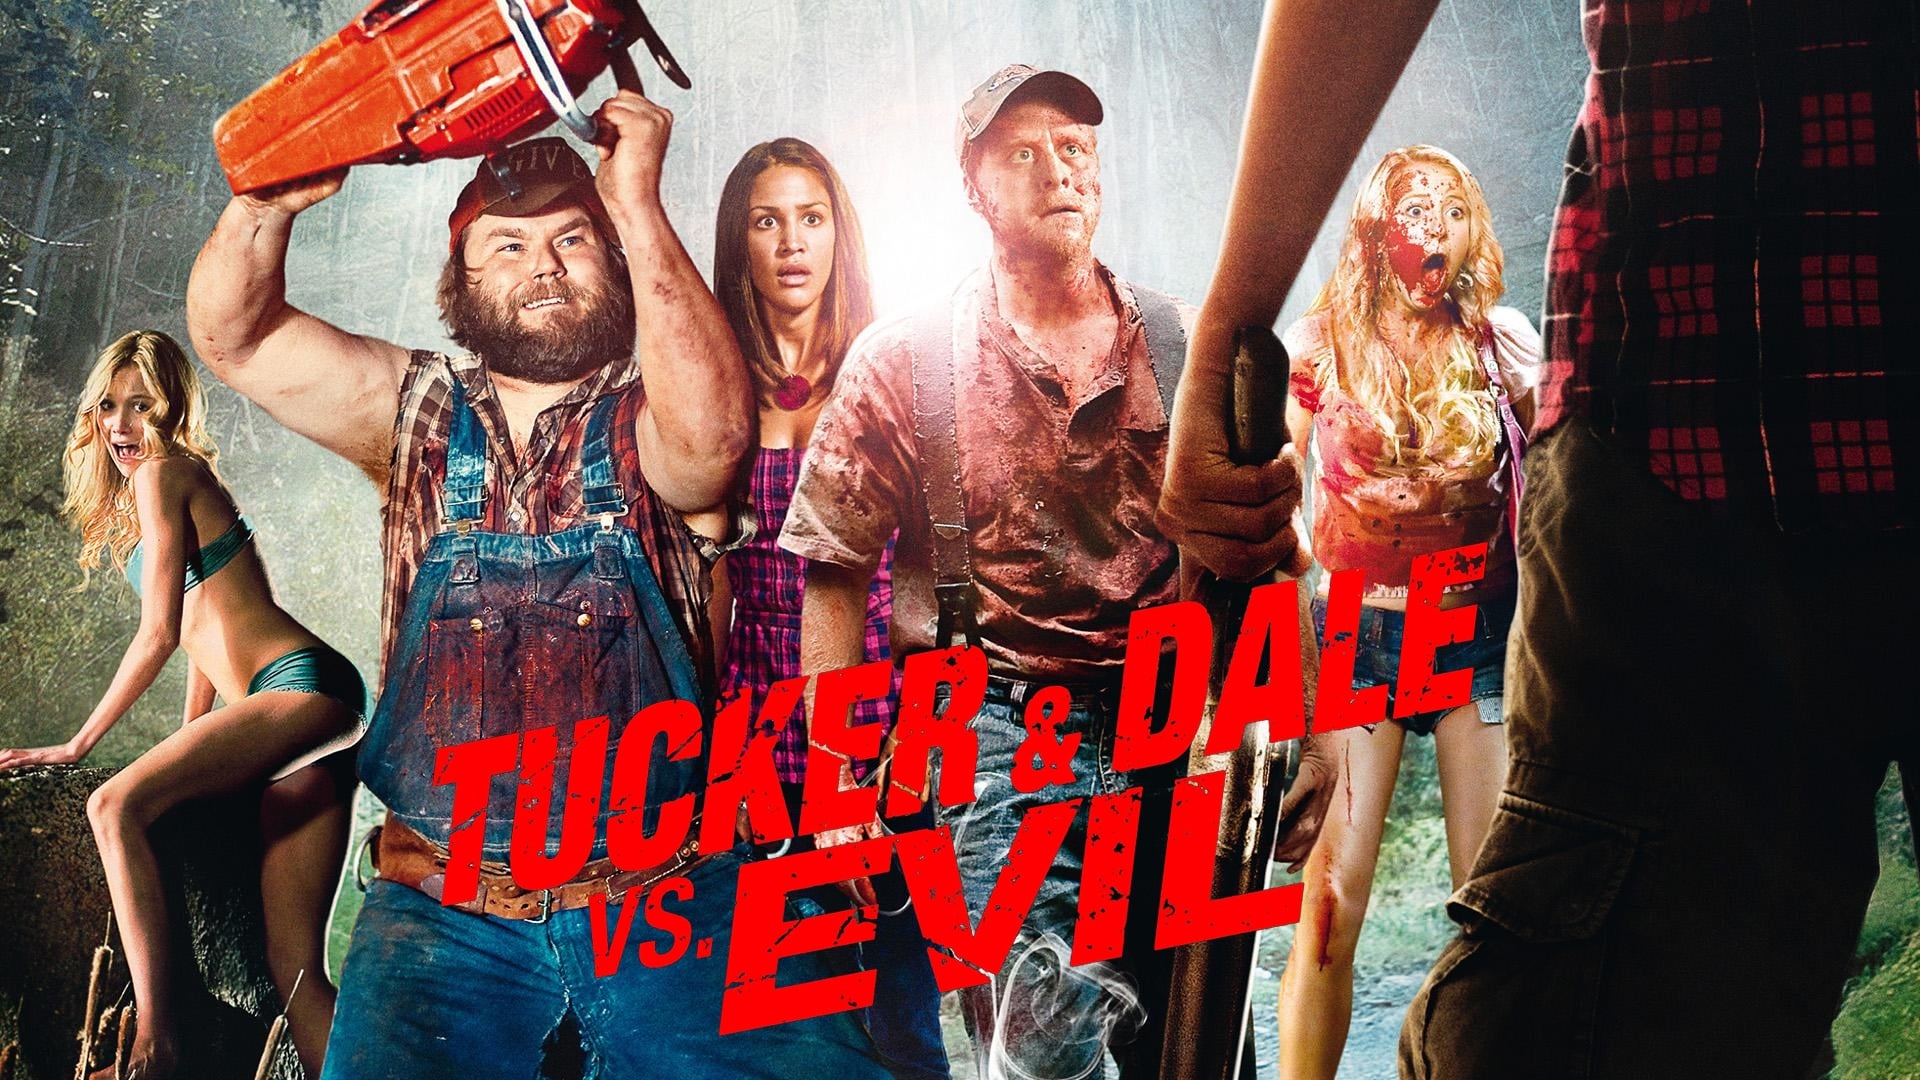 Tucker and Dale vs. Evil (2010)